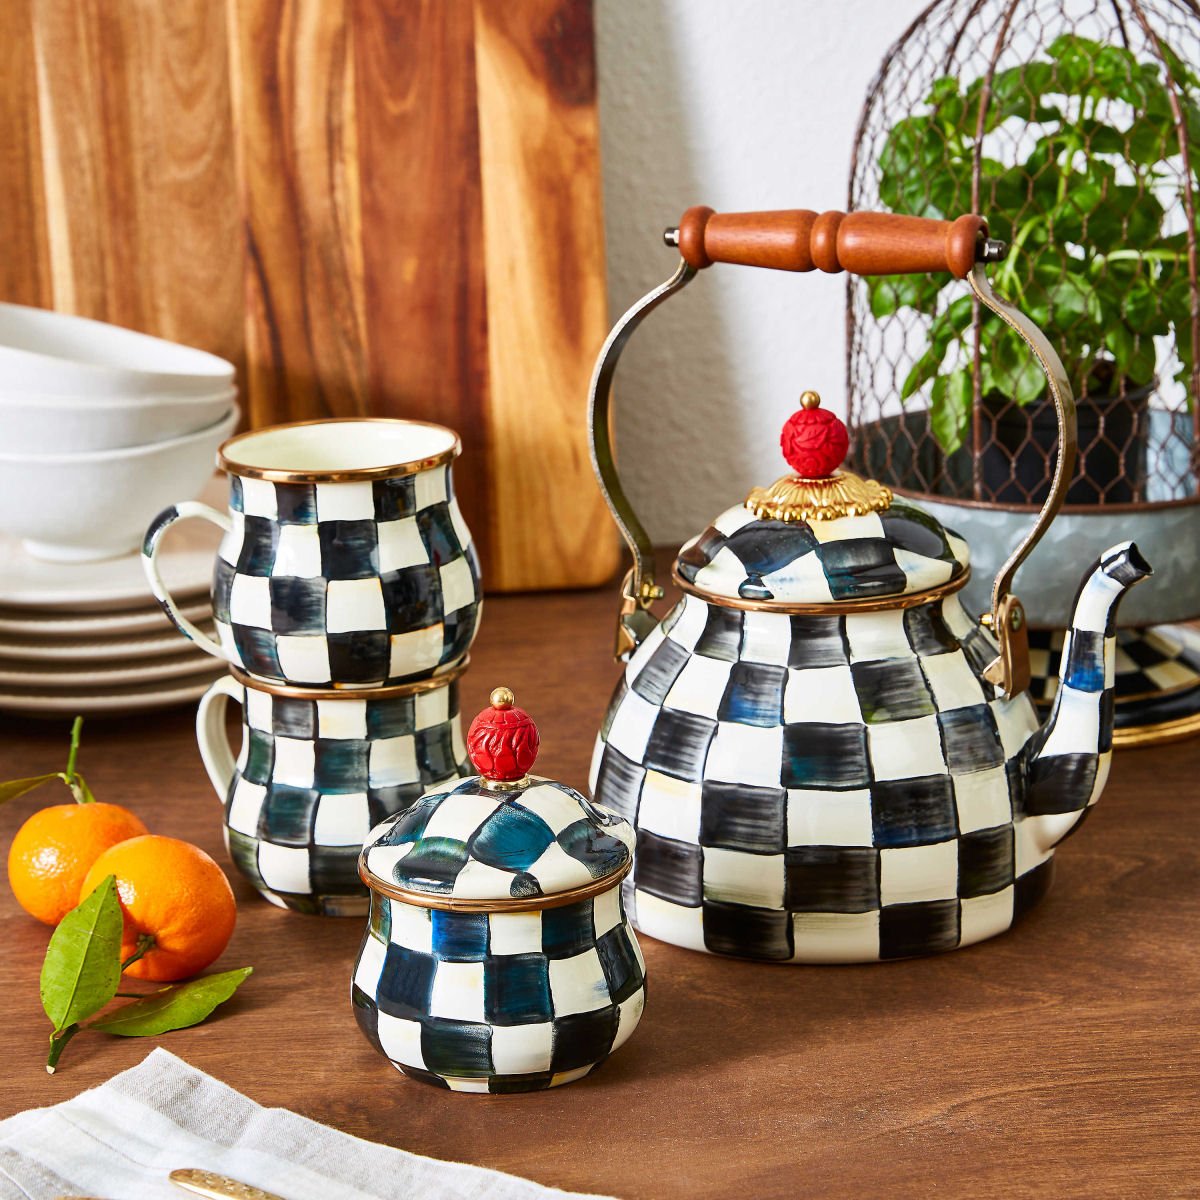 Anna Czaniecka's kettle is shaped like mugs to measure water for tea